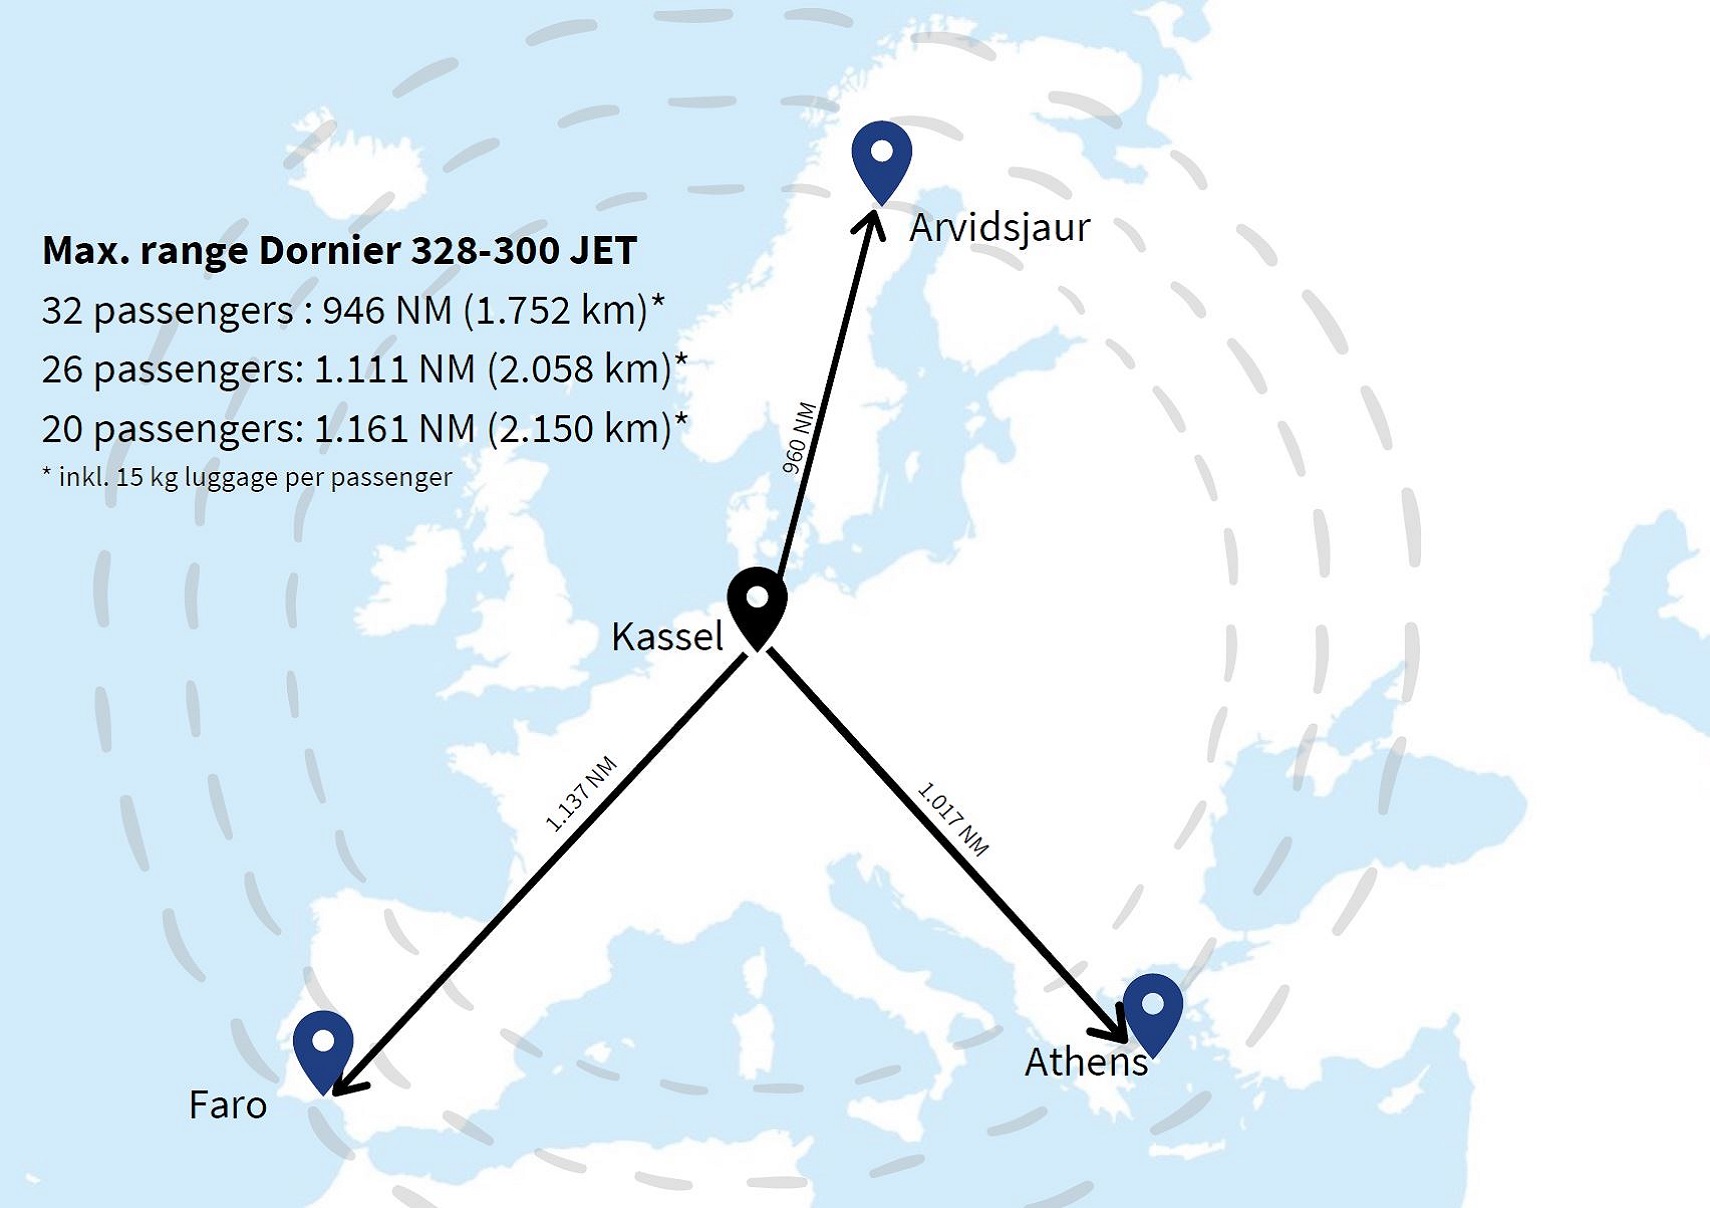 Dornier 328-300 Jet seat map ex Kassel airport 